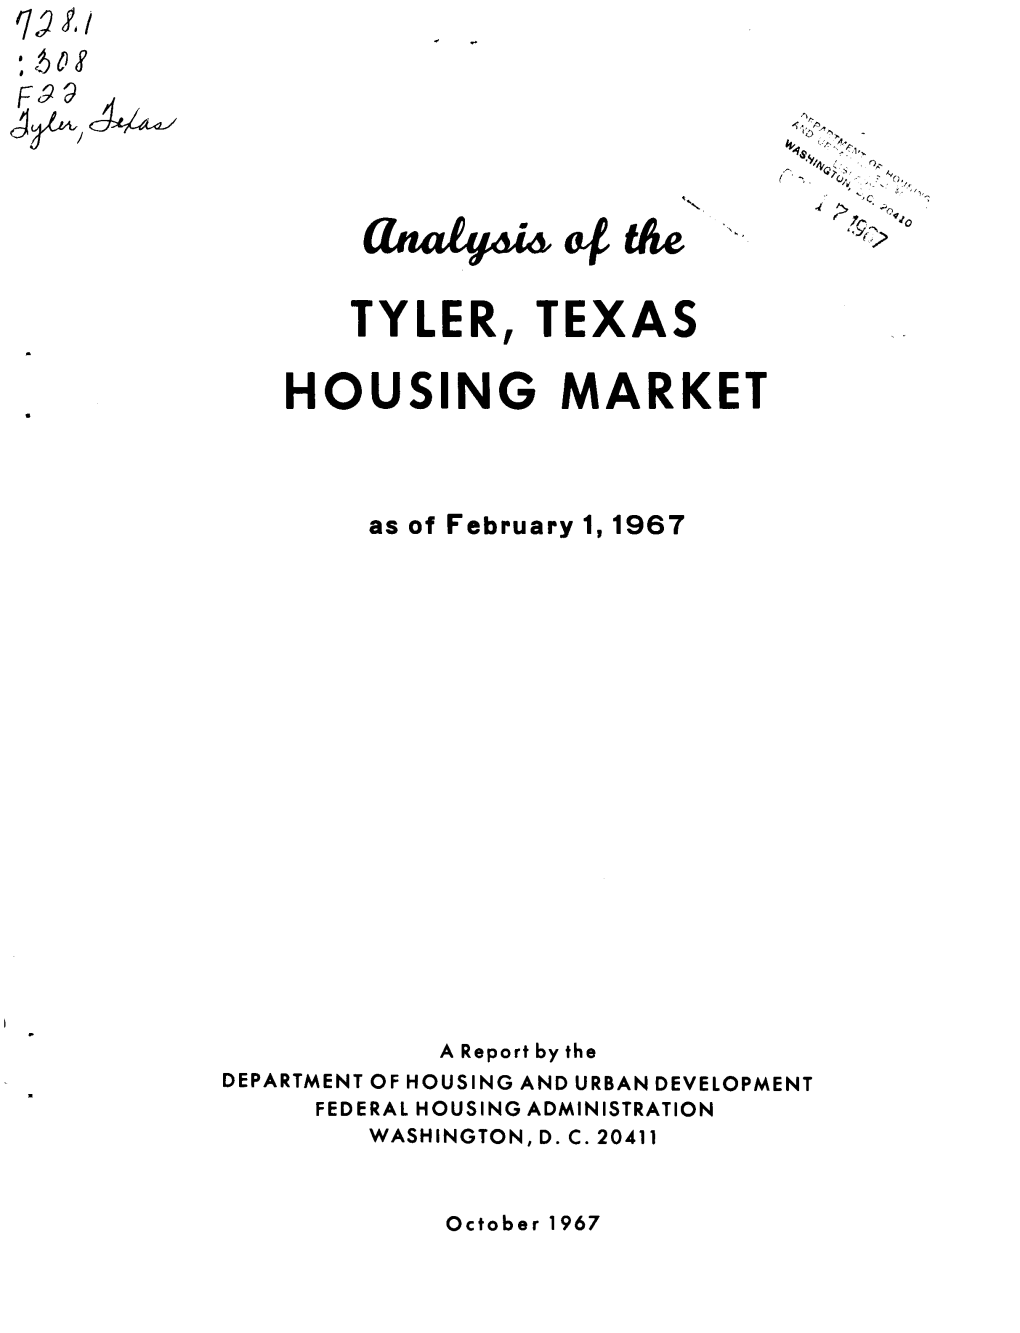 Analysis of the Tyler, Texas Housing Market